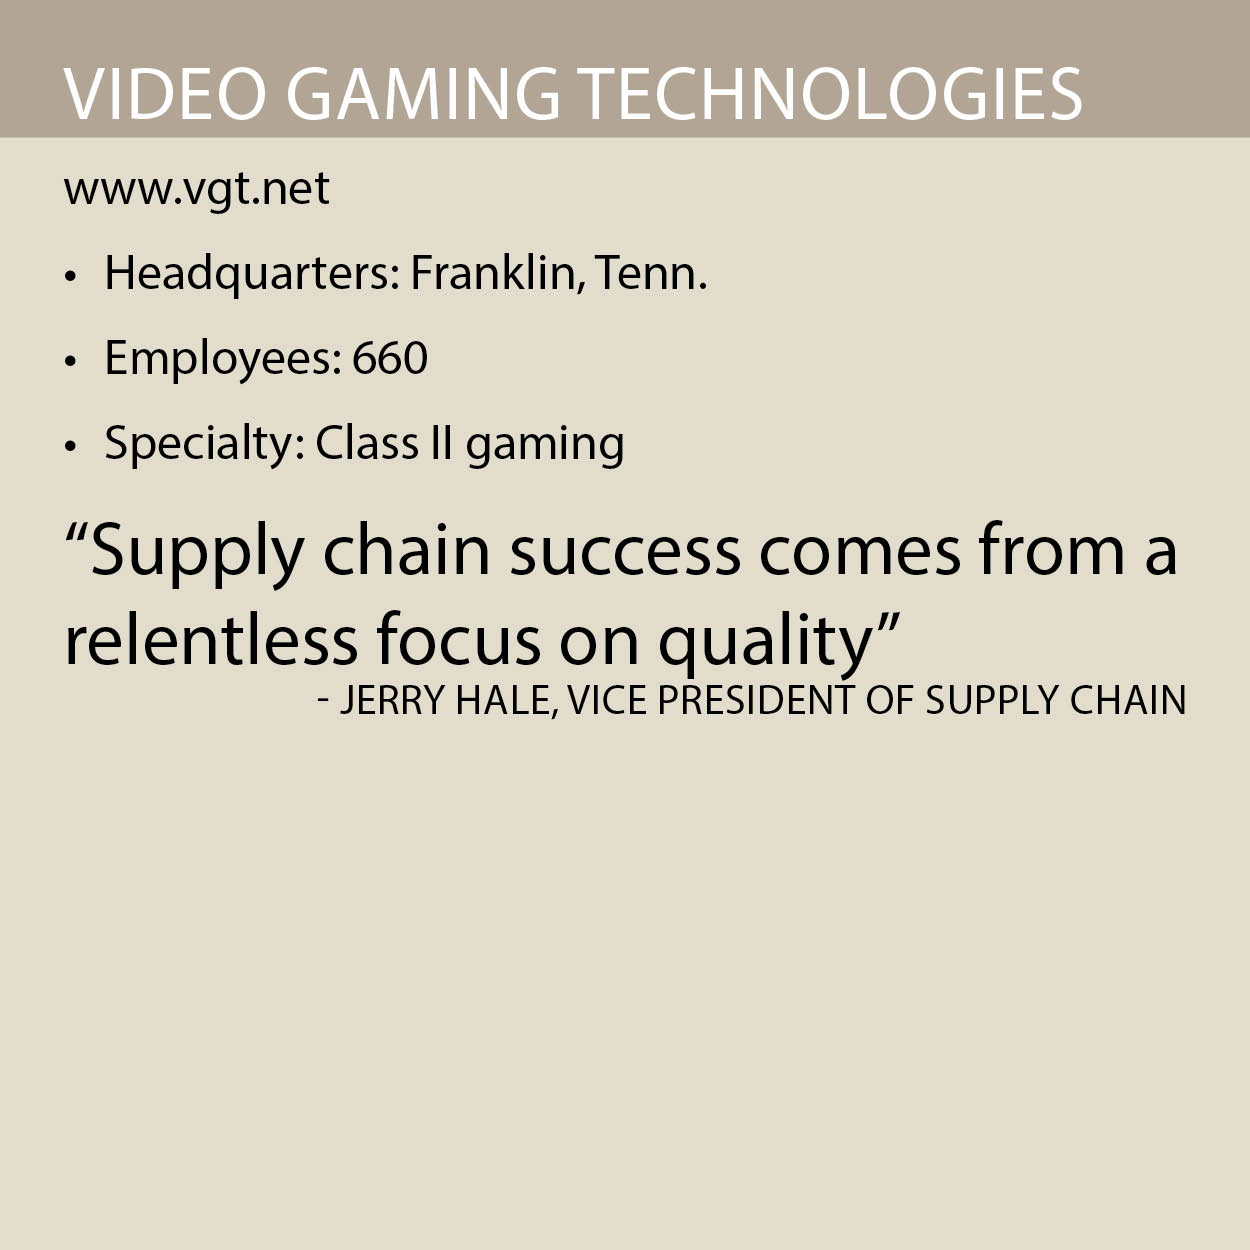 Video Gaming Technologies fact box